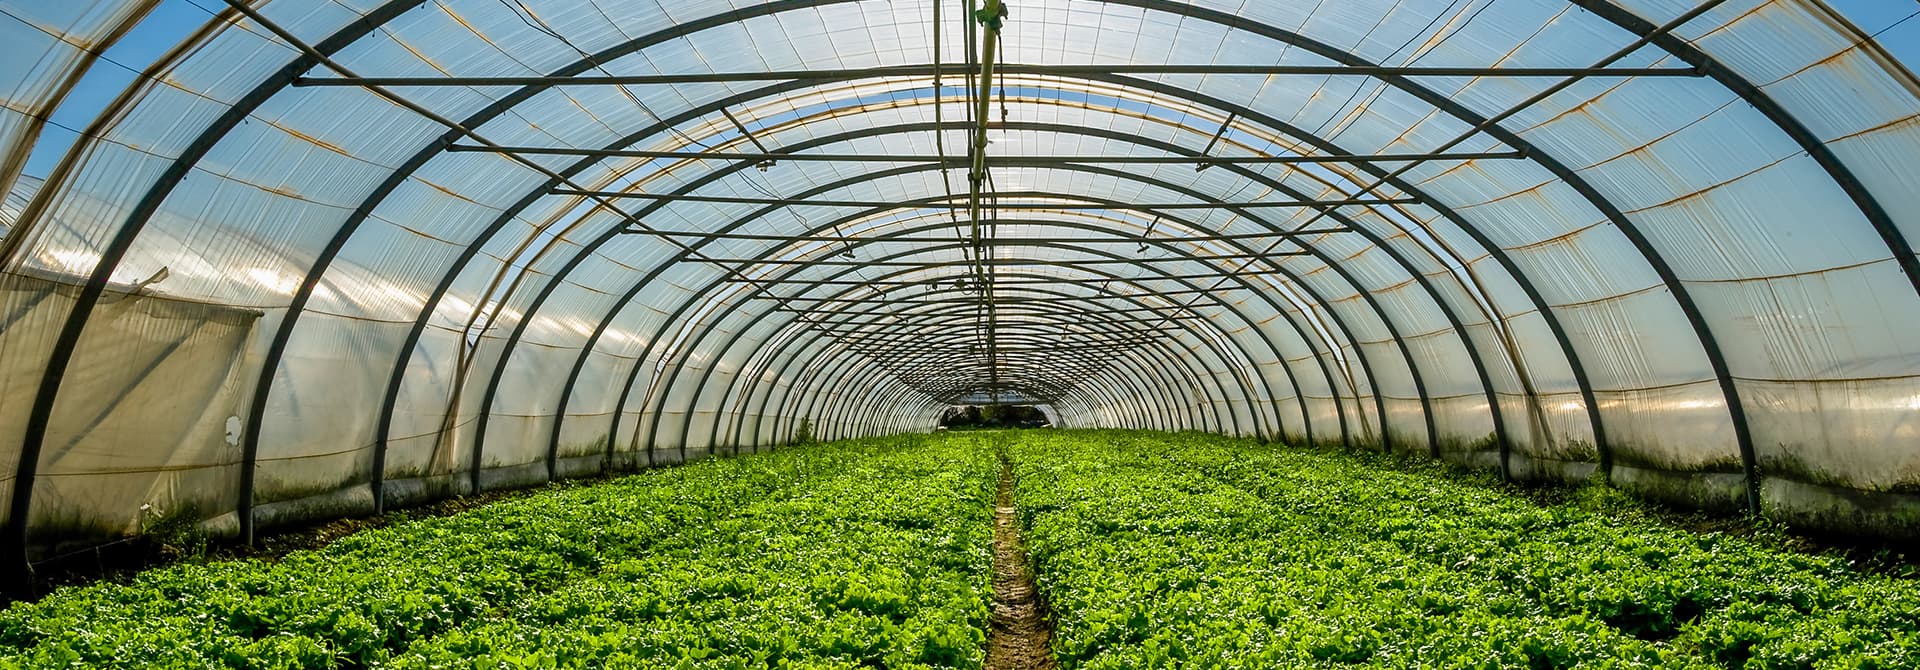 smart farming greenhouse automation